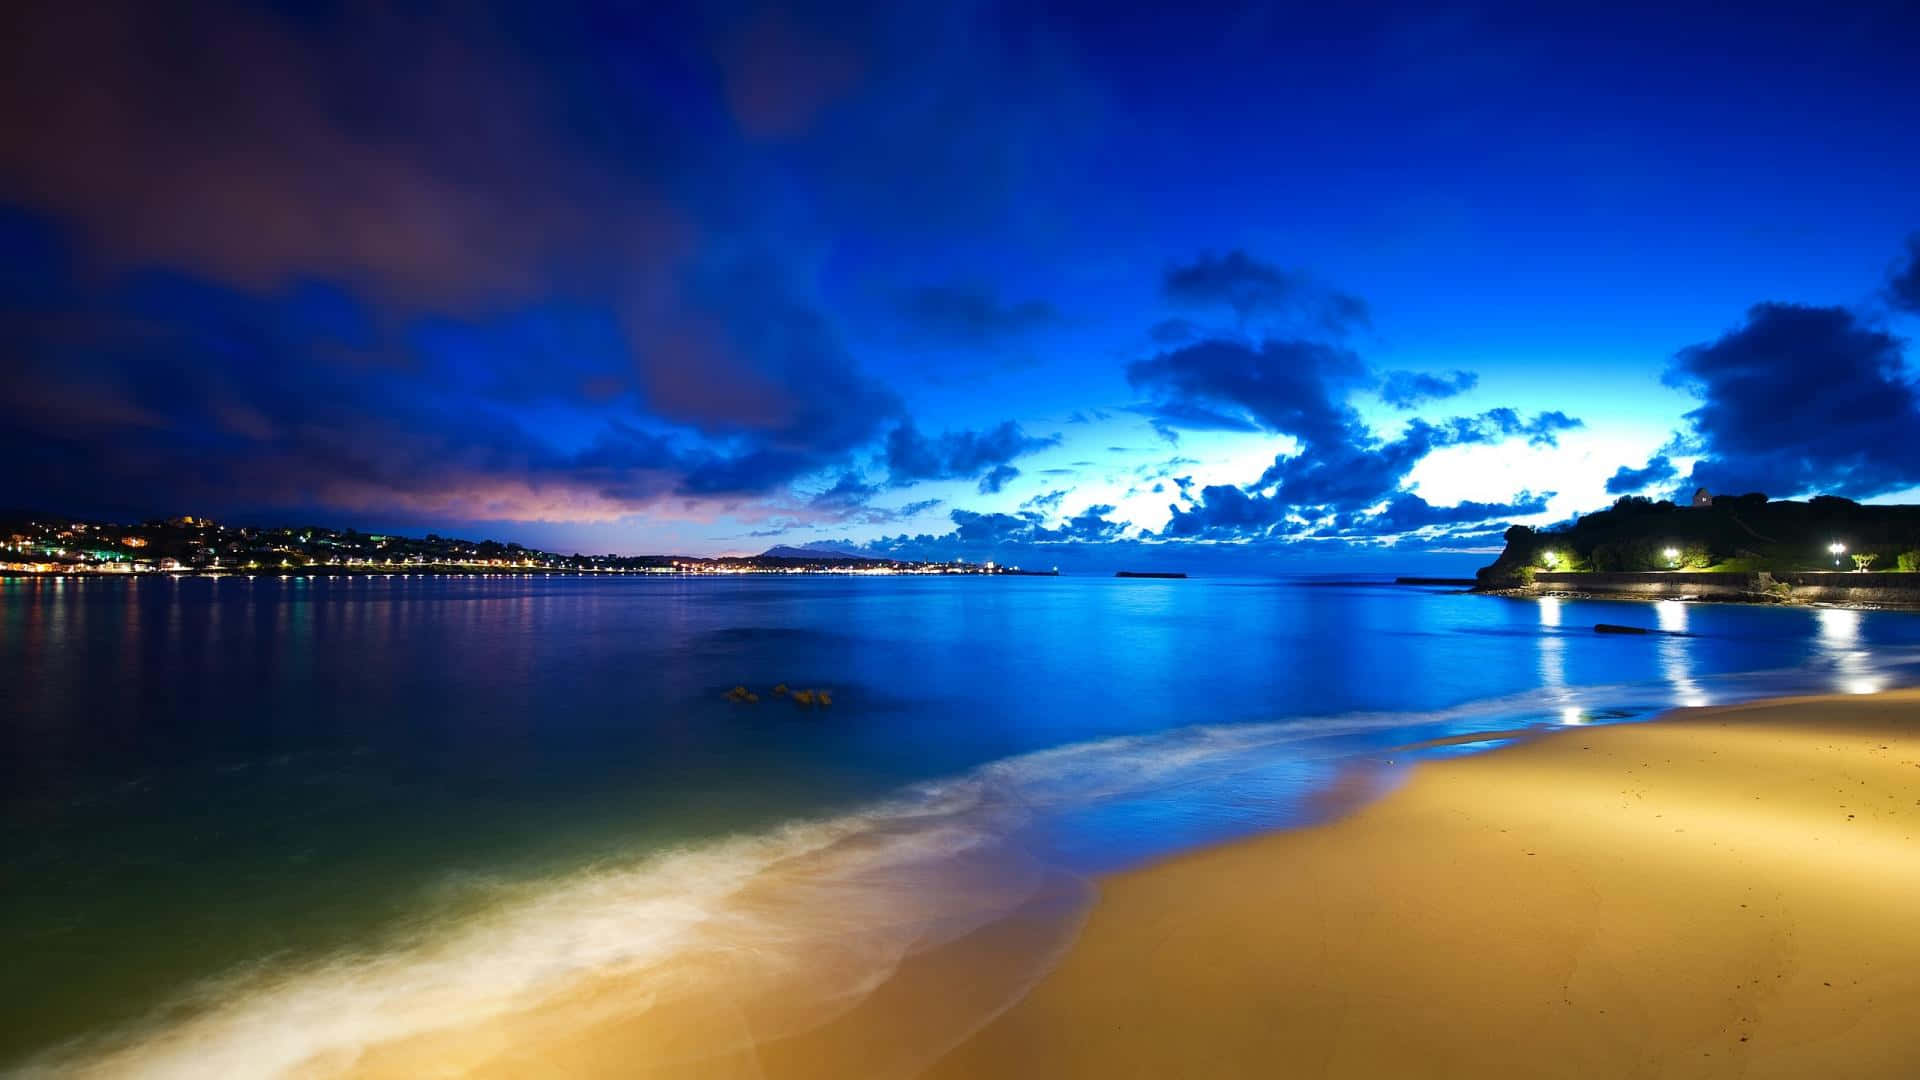 720pbakgrundsbild Av Stranden I Natten Vid Saint Jean.